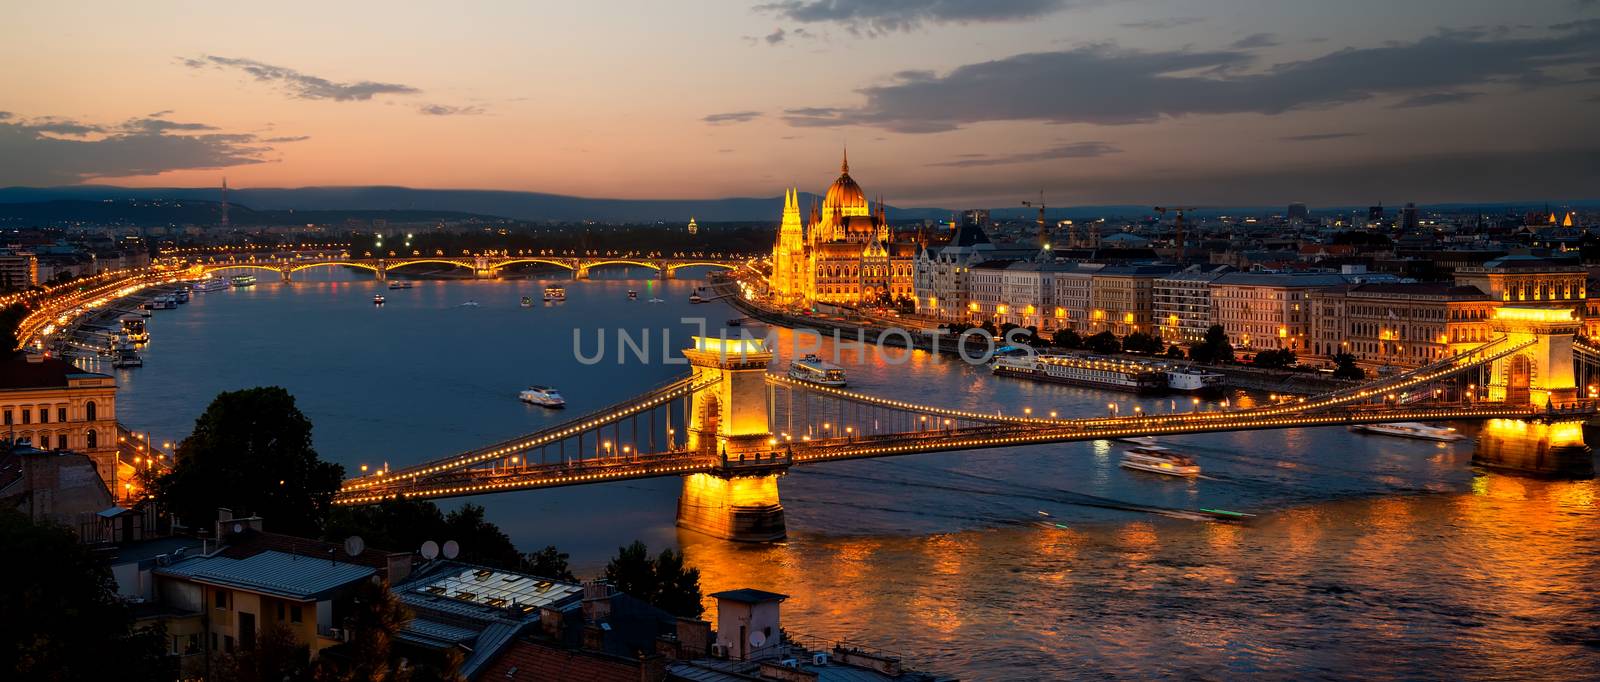 Parliament and bridges of Budapest illuminated in evening, Hungary